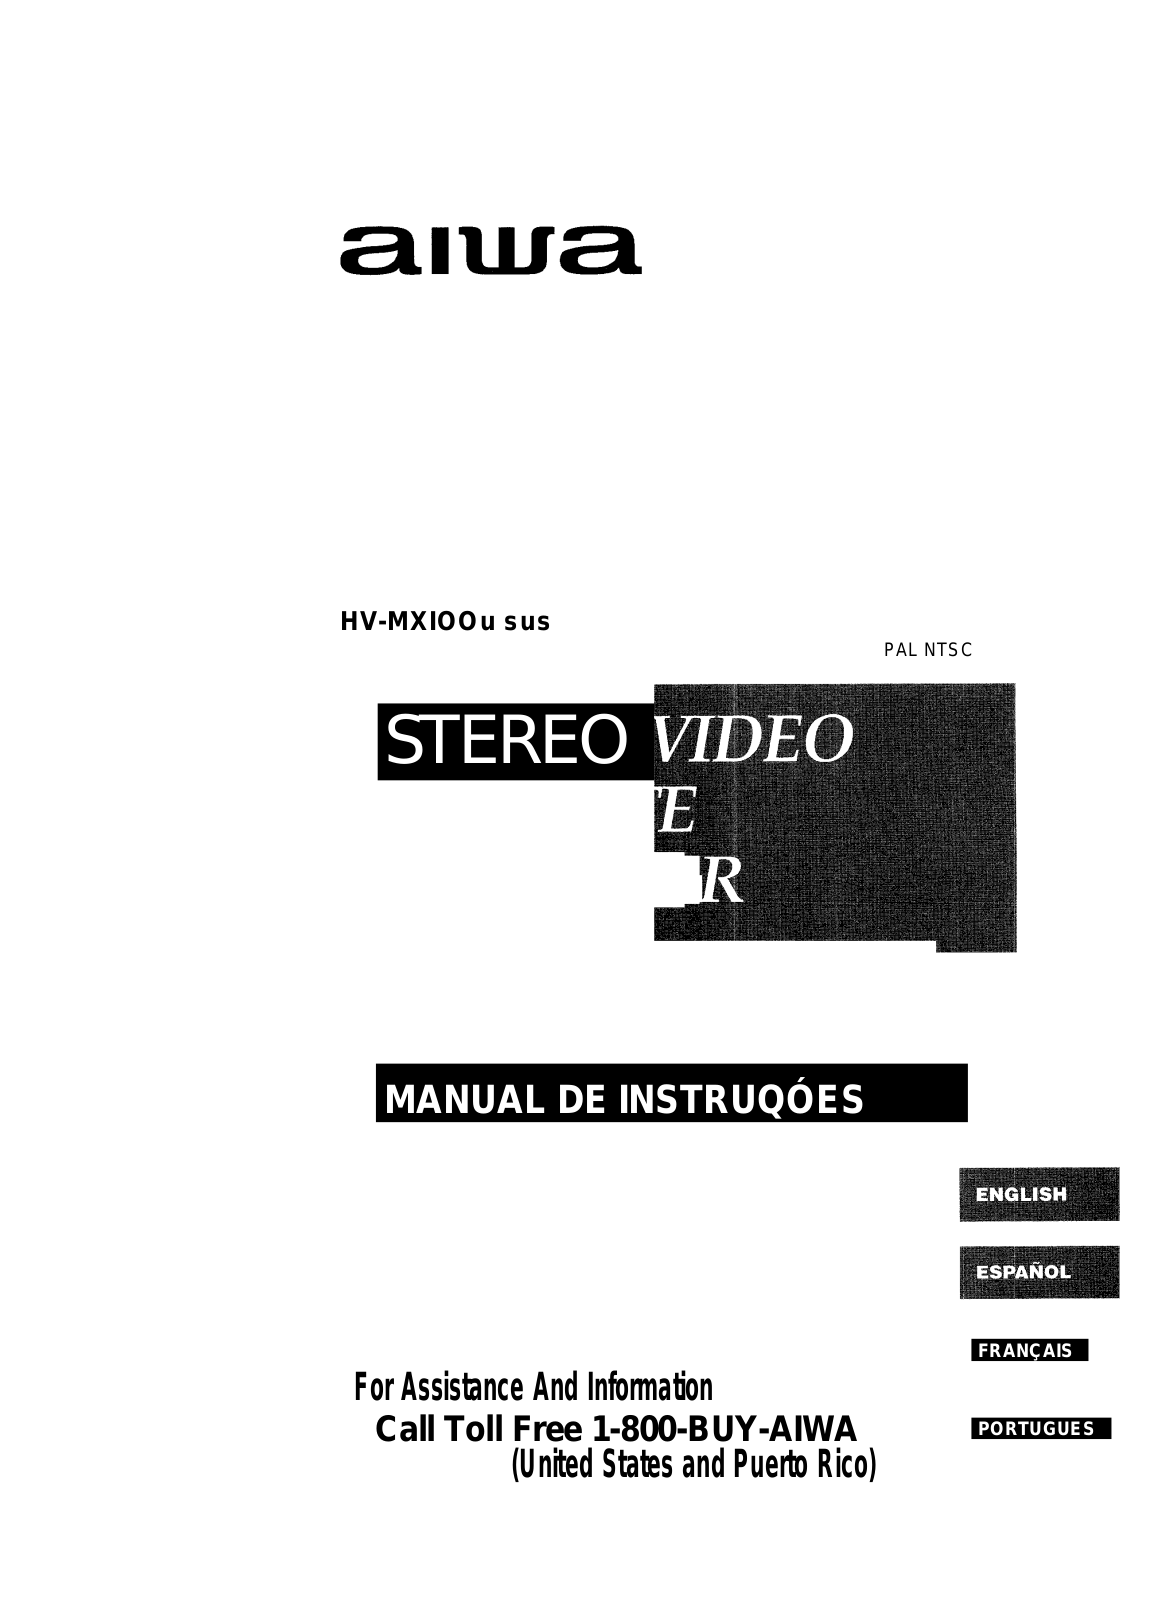 Aiwa HV-MX100U User Manual